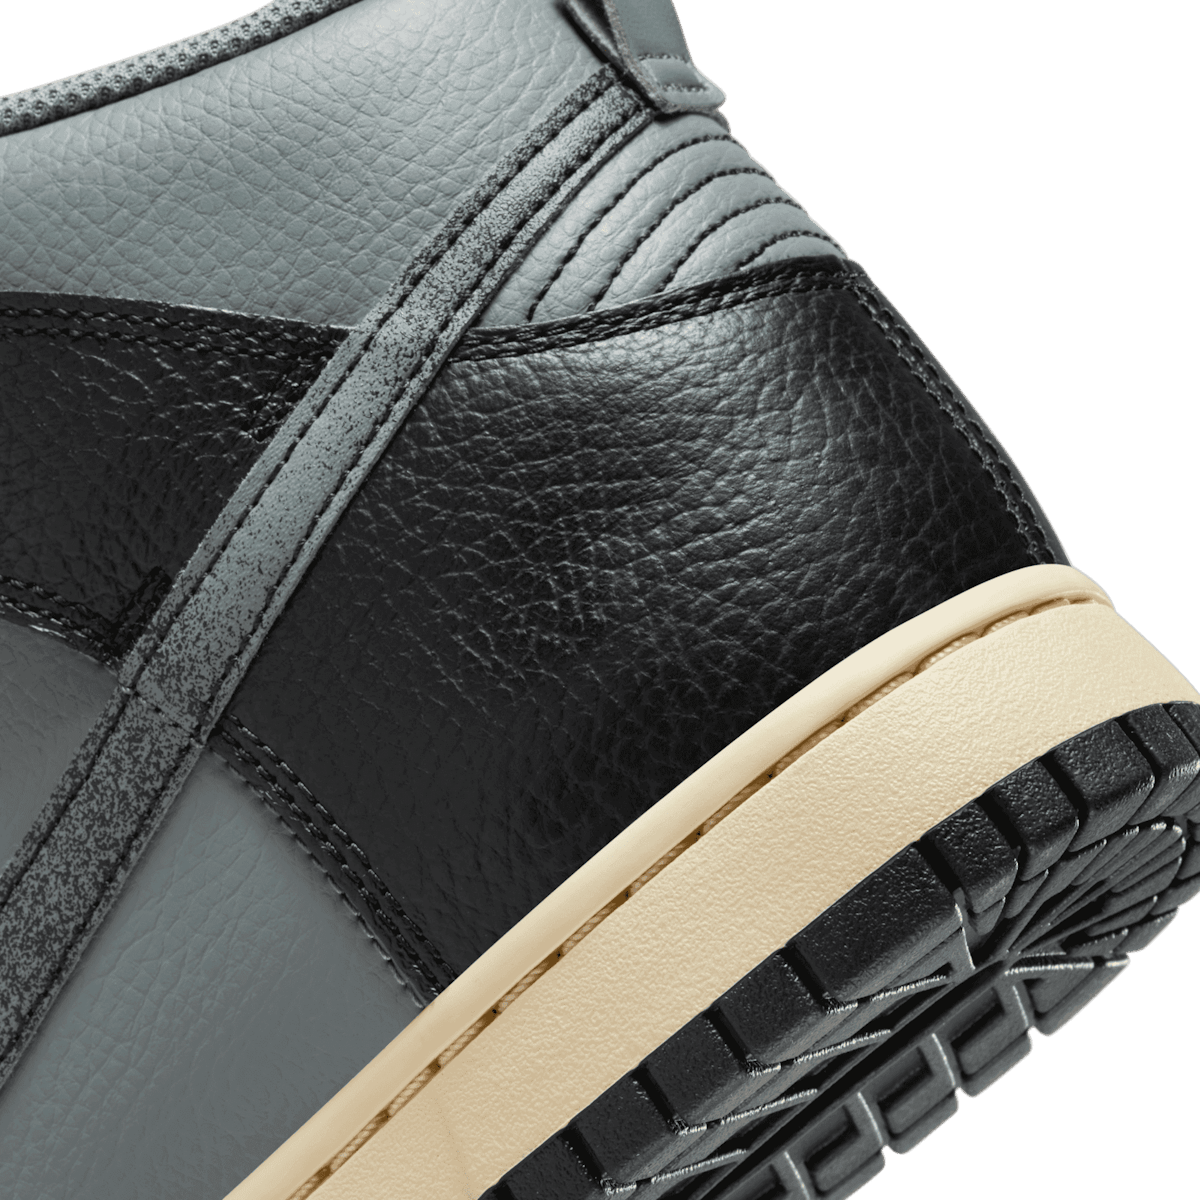 Smoke Grey And Black Cover This Nike Dunk High Premium